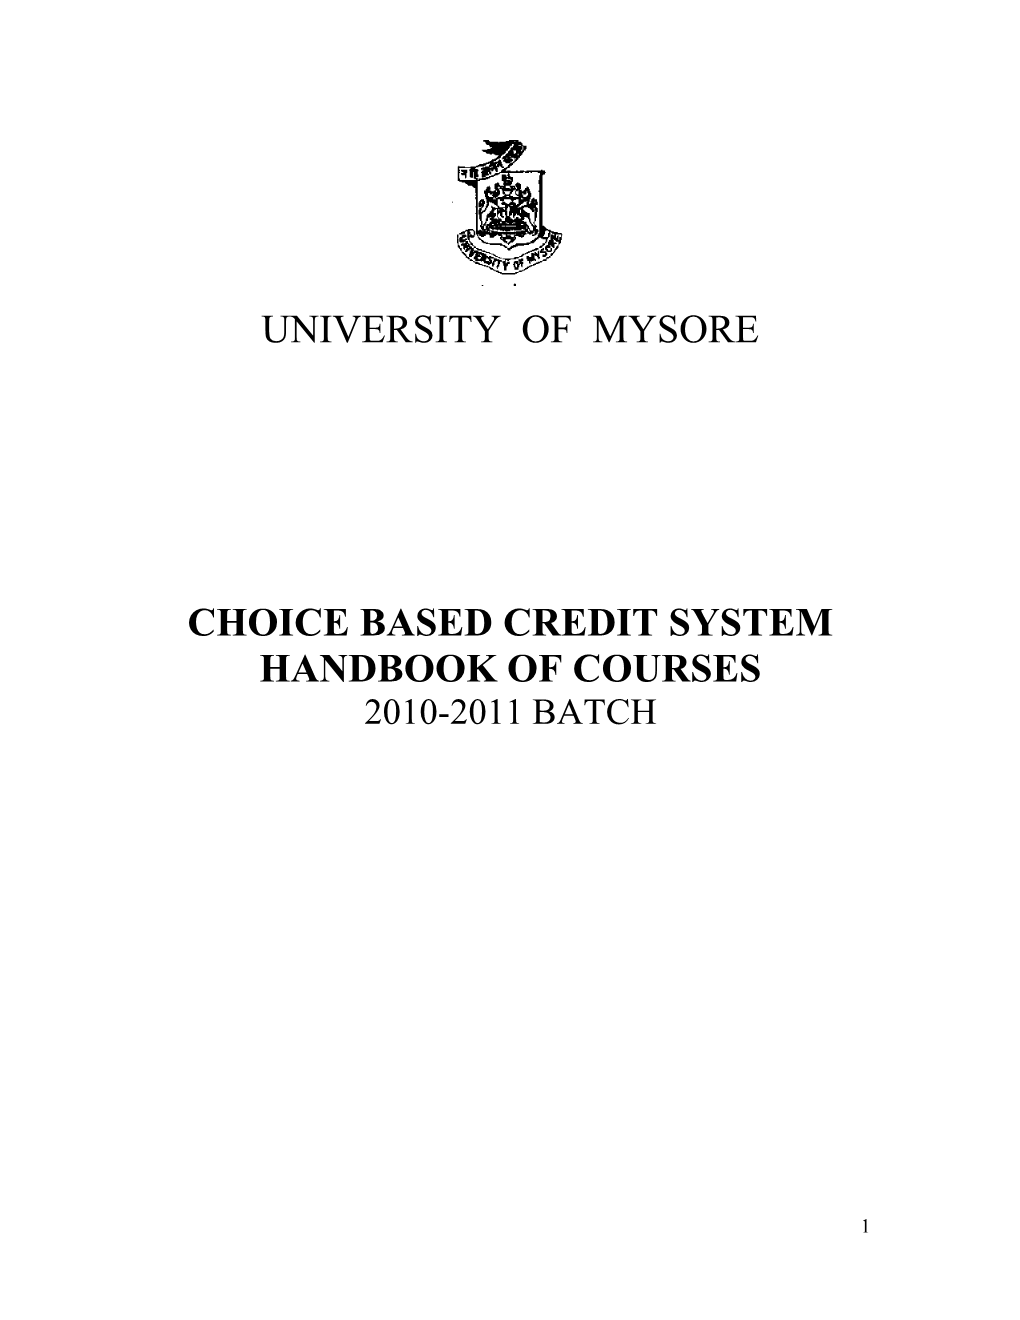 University of Mysore Choice Based Credit System